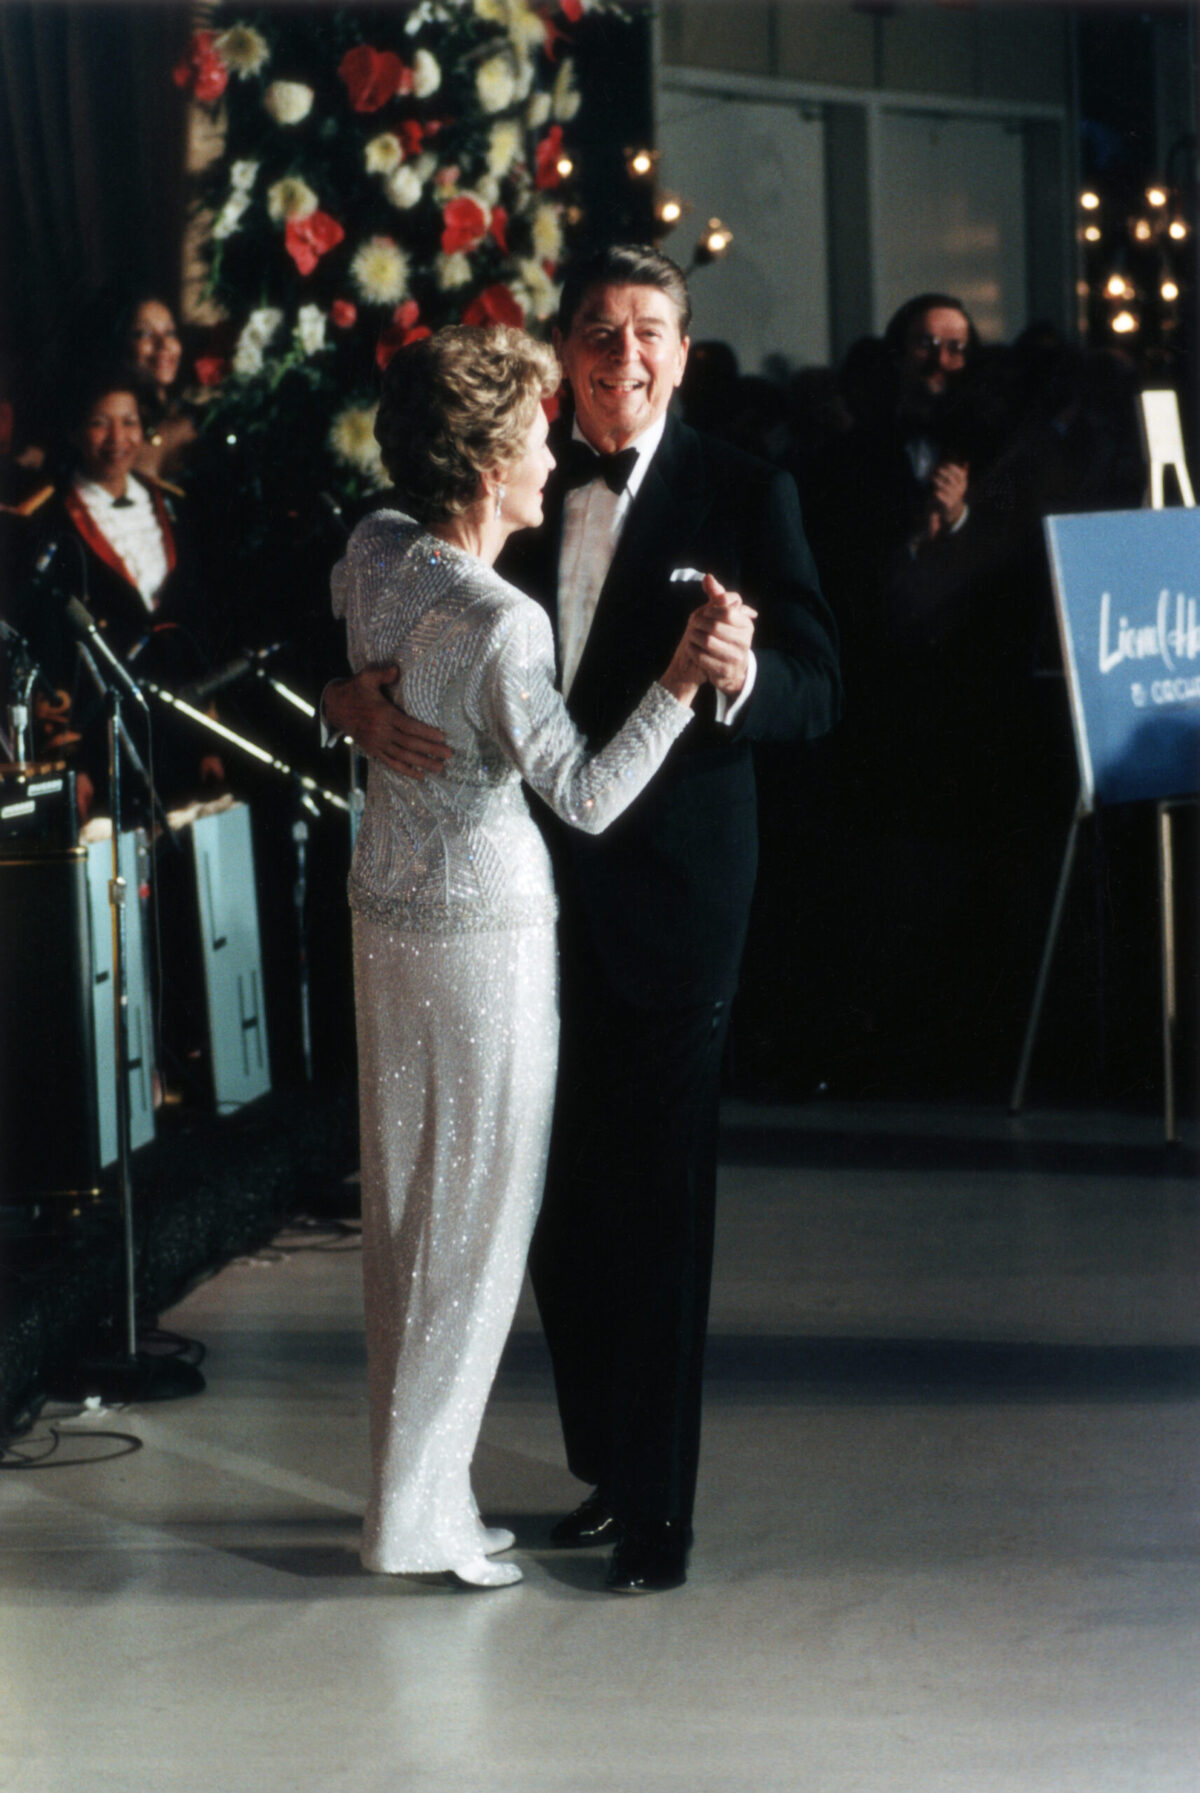 first lady 46000 dress 46,000 $46,000 nancy reagan hillary clinton Jacqueline Kennedy Onassis michelle obama melania trump